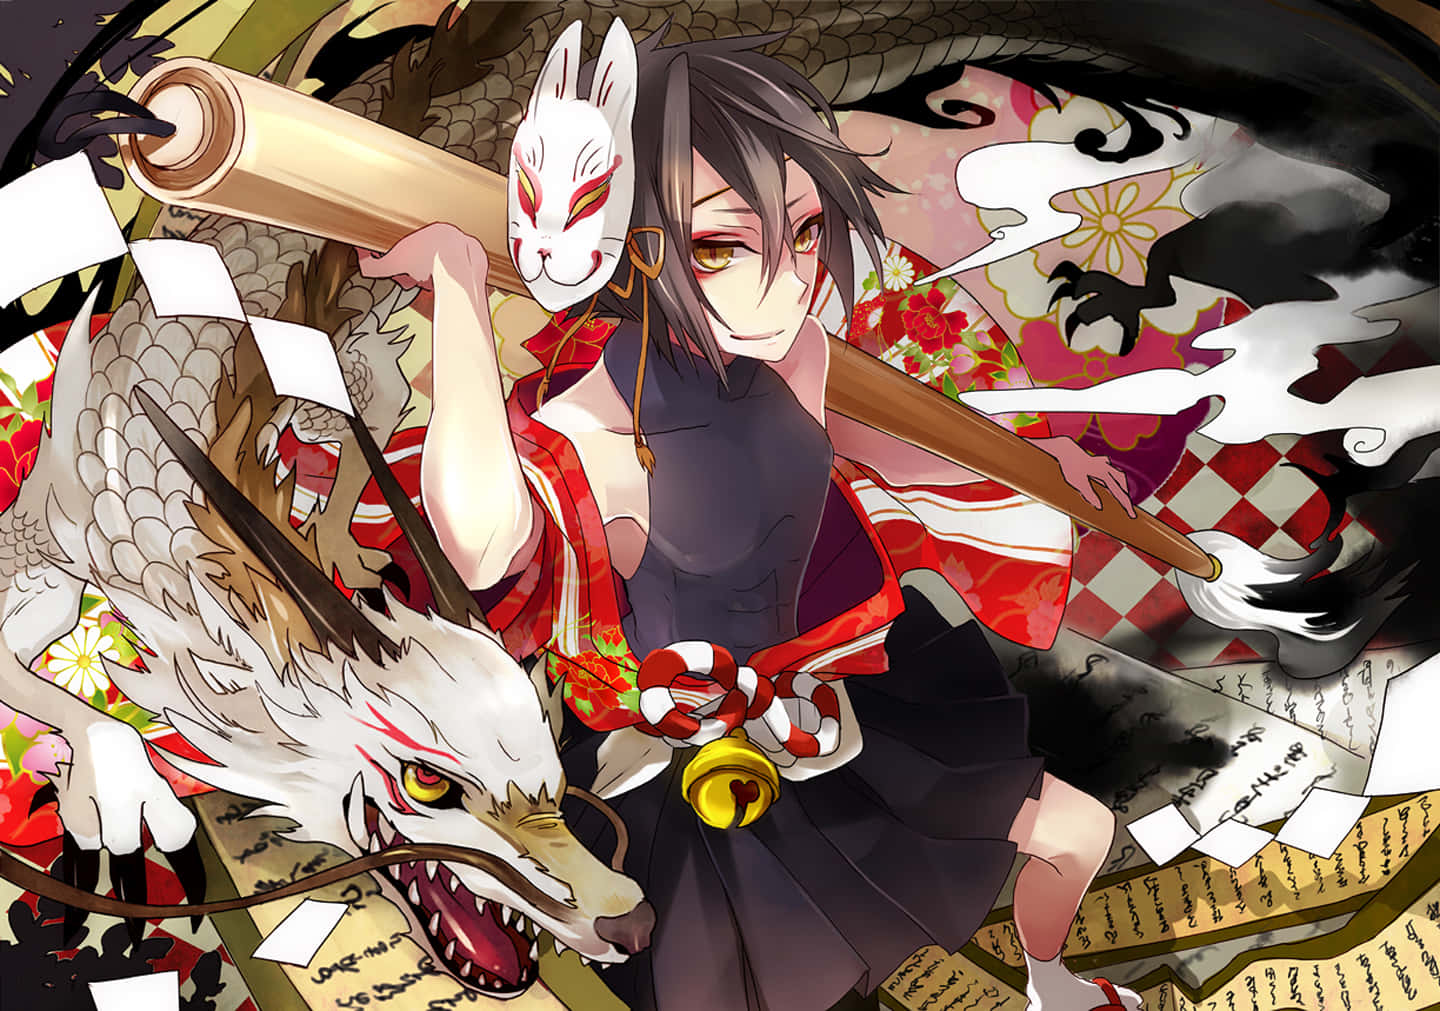 Anime Boy With Fox Mask Background